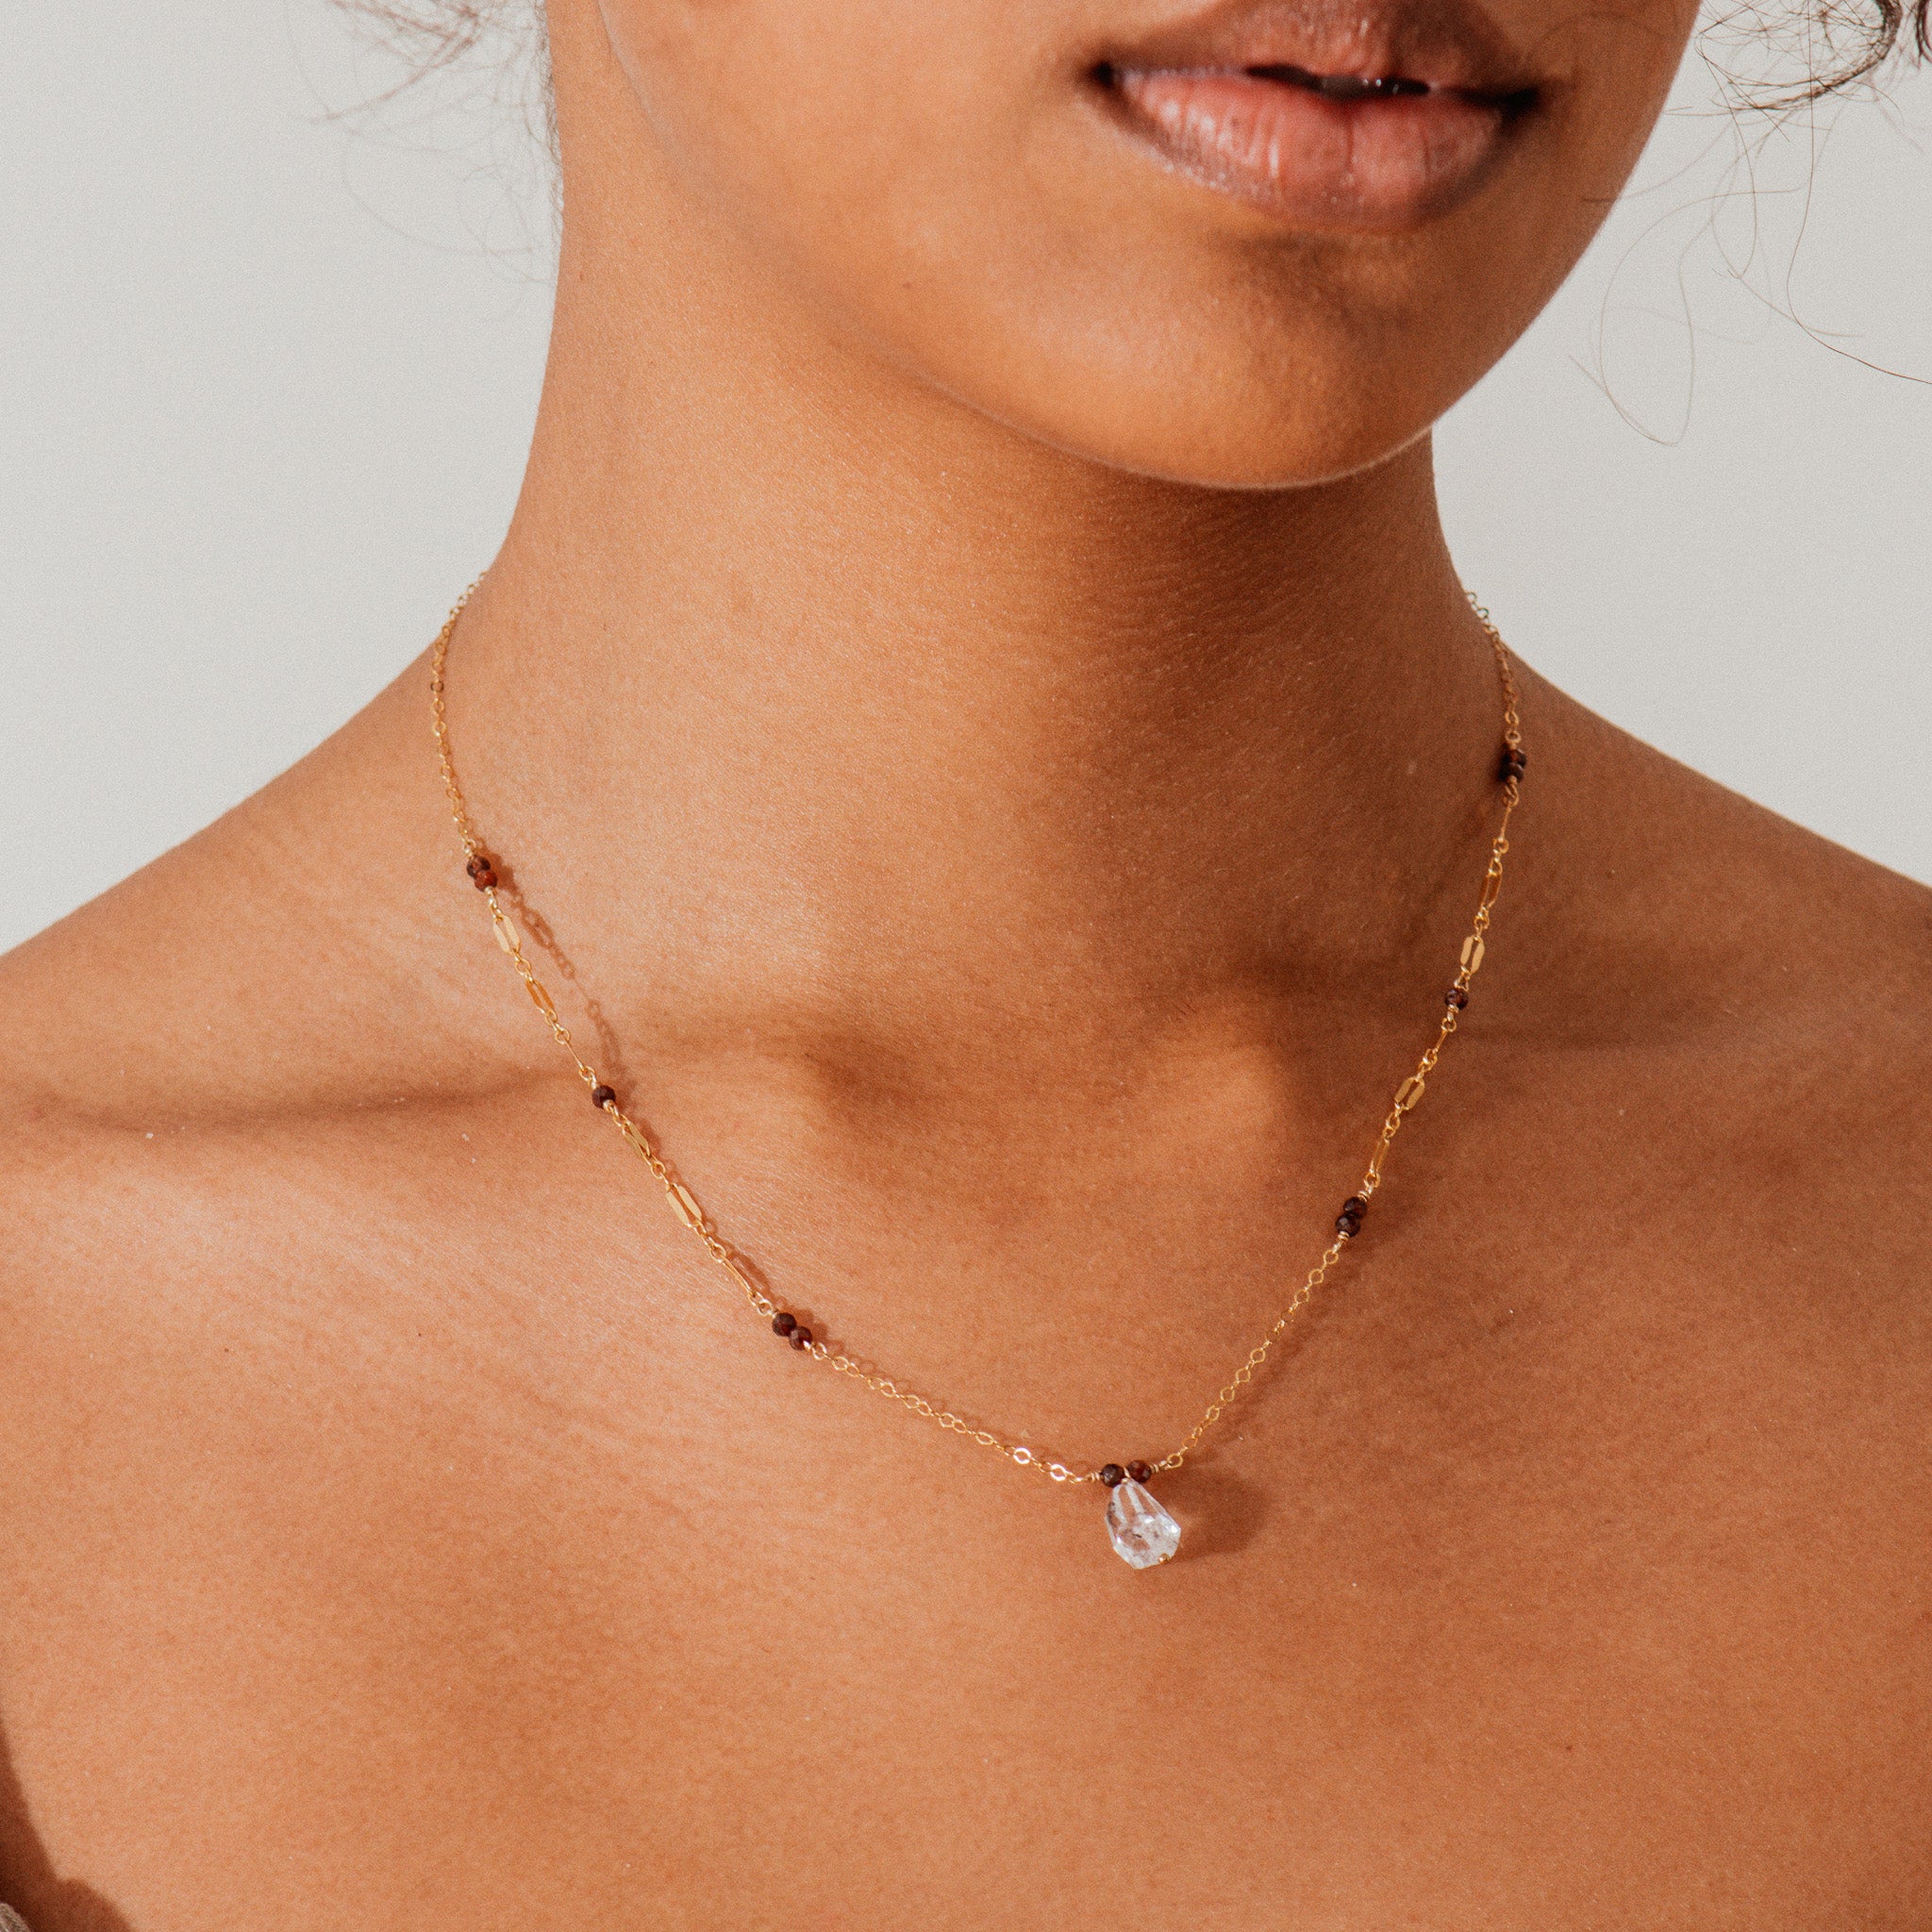 Gold Herkimer Diamond & Garnet Necklace